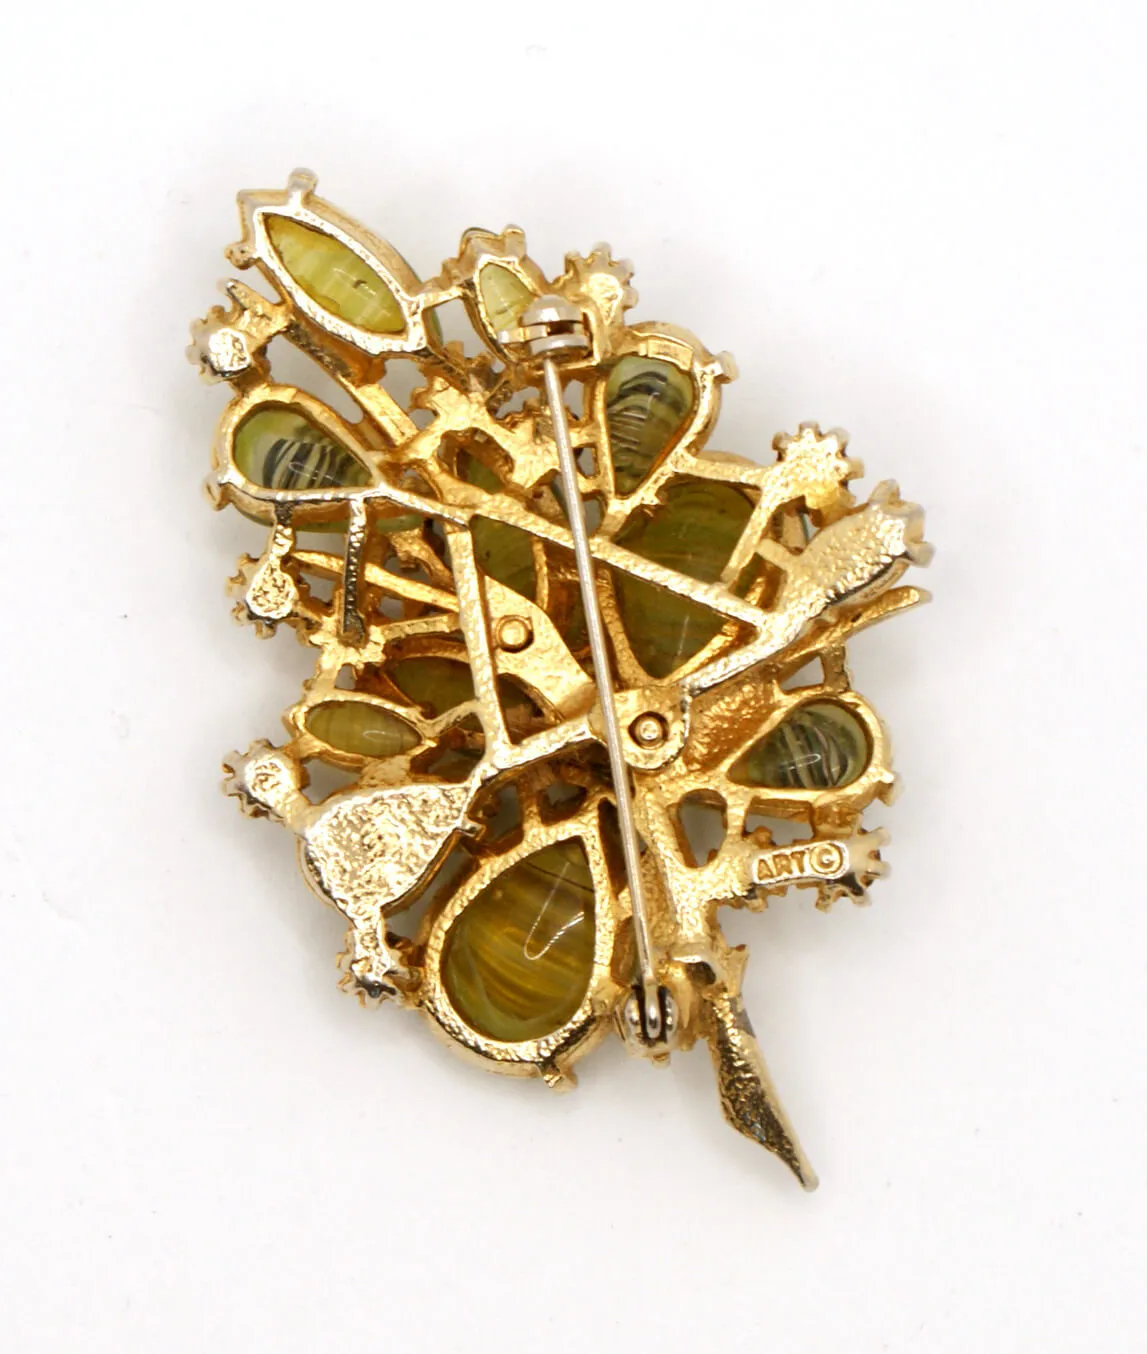 Vintage ART brooch gold plated metal